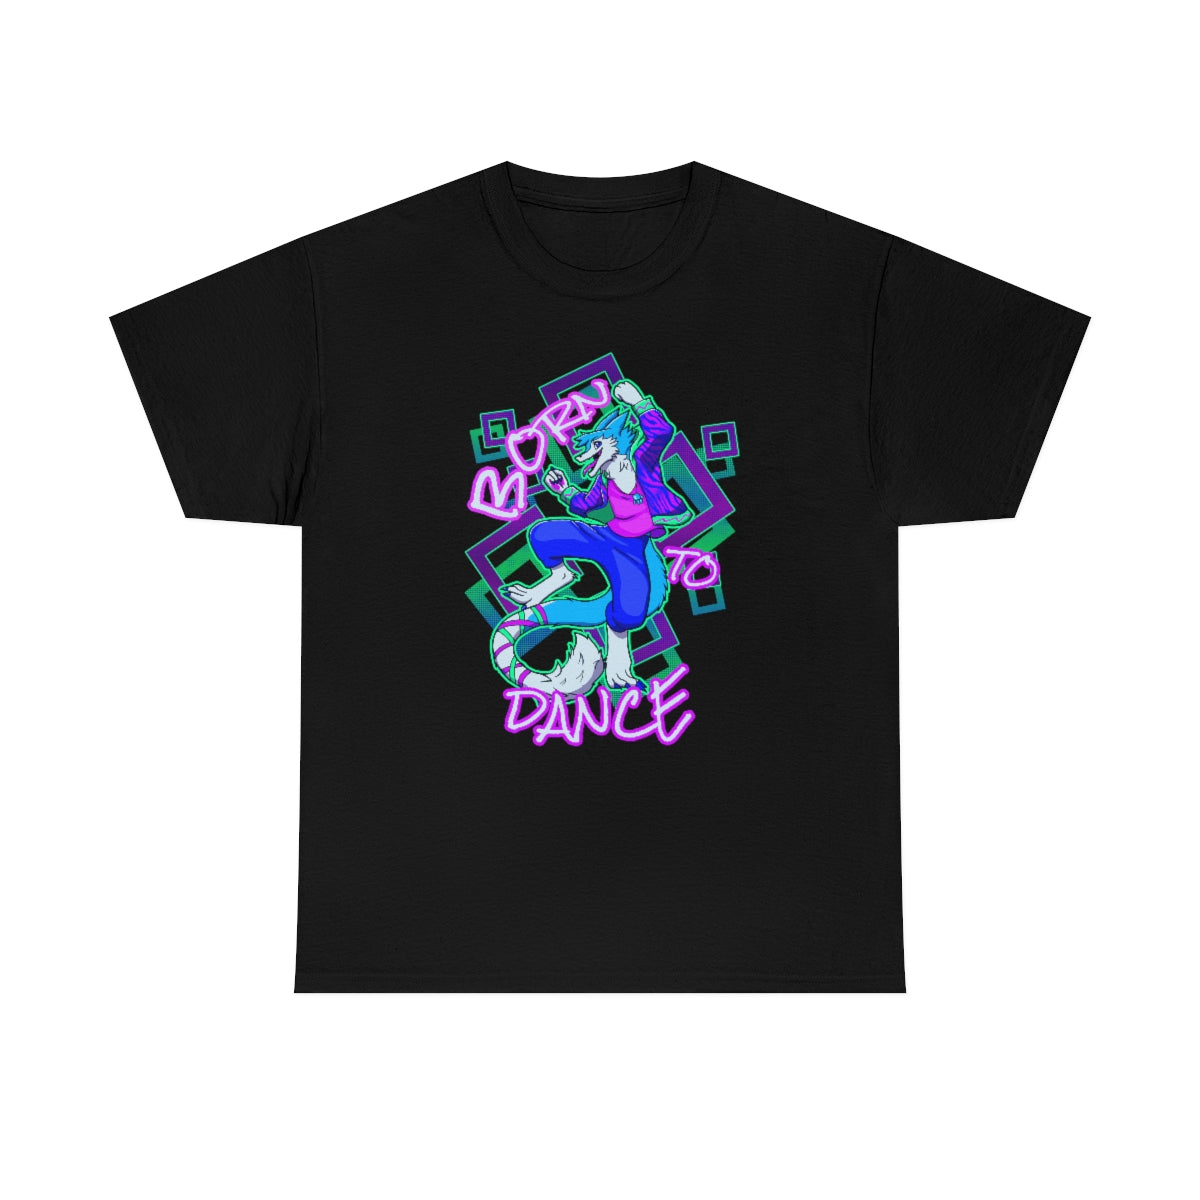 Born to Dance - T-Shirt T-Shirt Artworktee Black S 